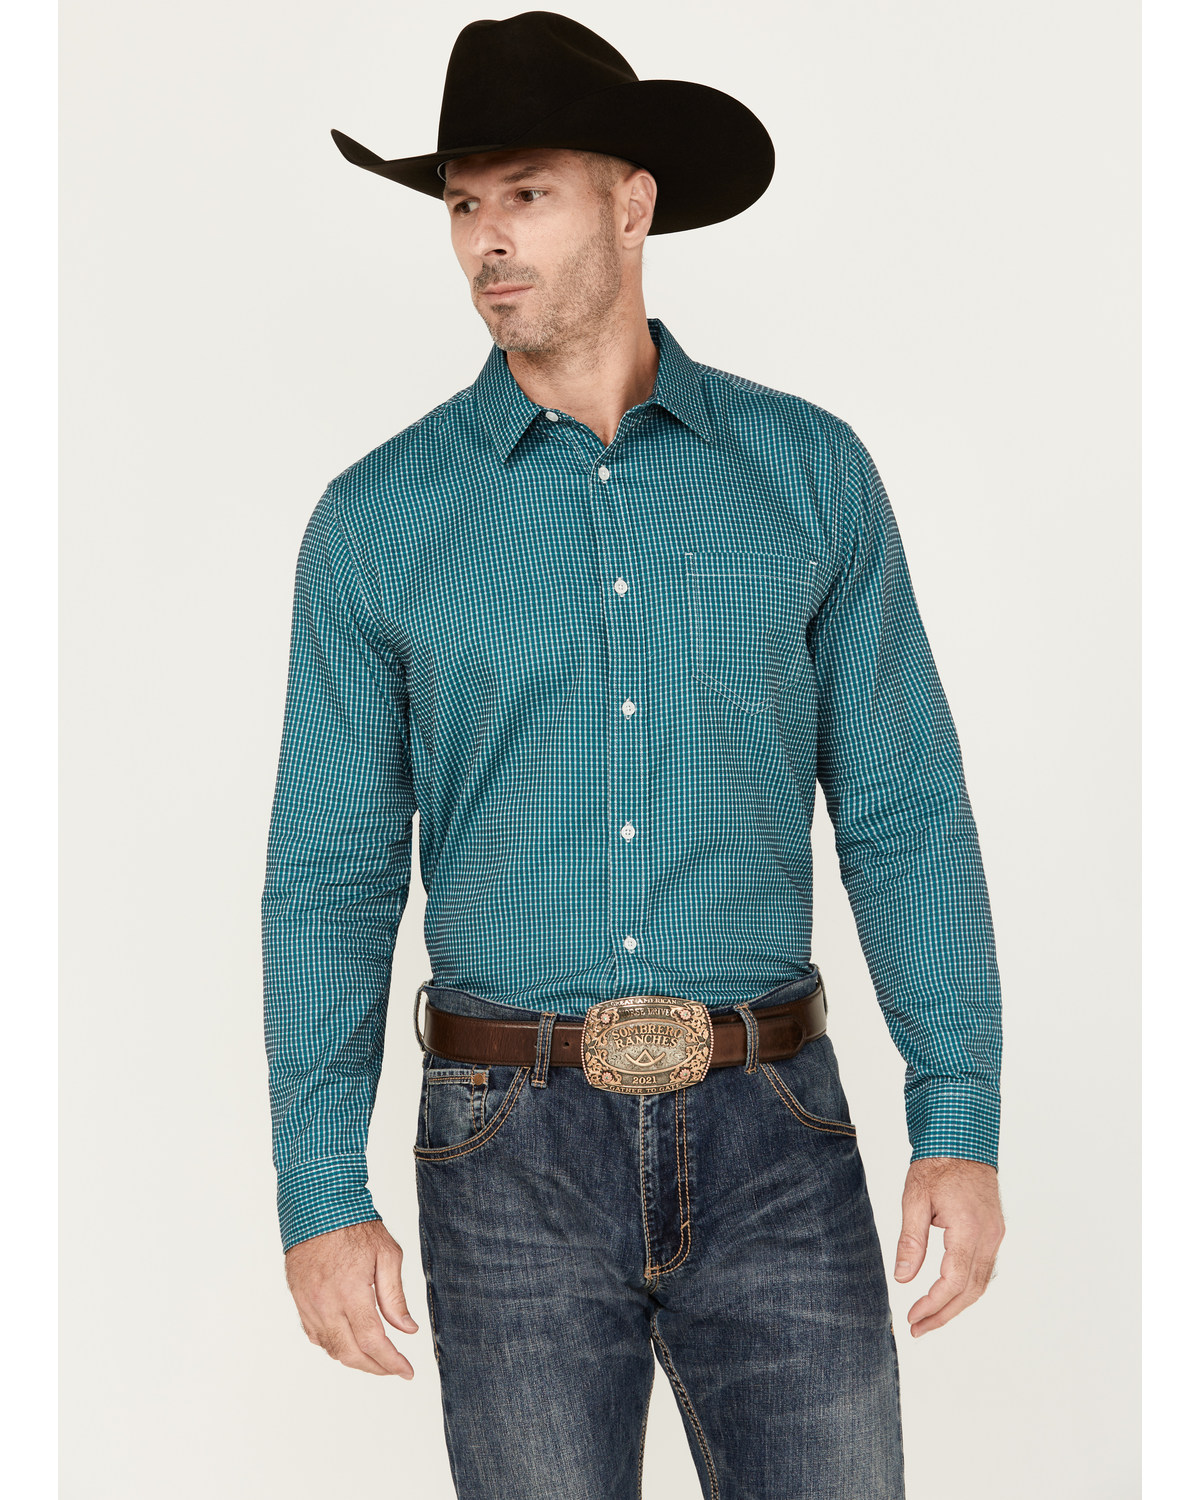 Gibson Trading Co Men's Checkered Print Long Sleeve Button-Down Western Shirt